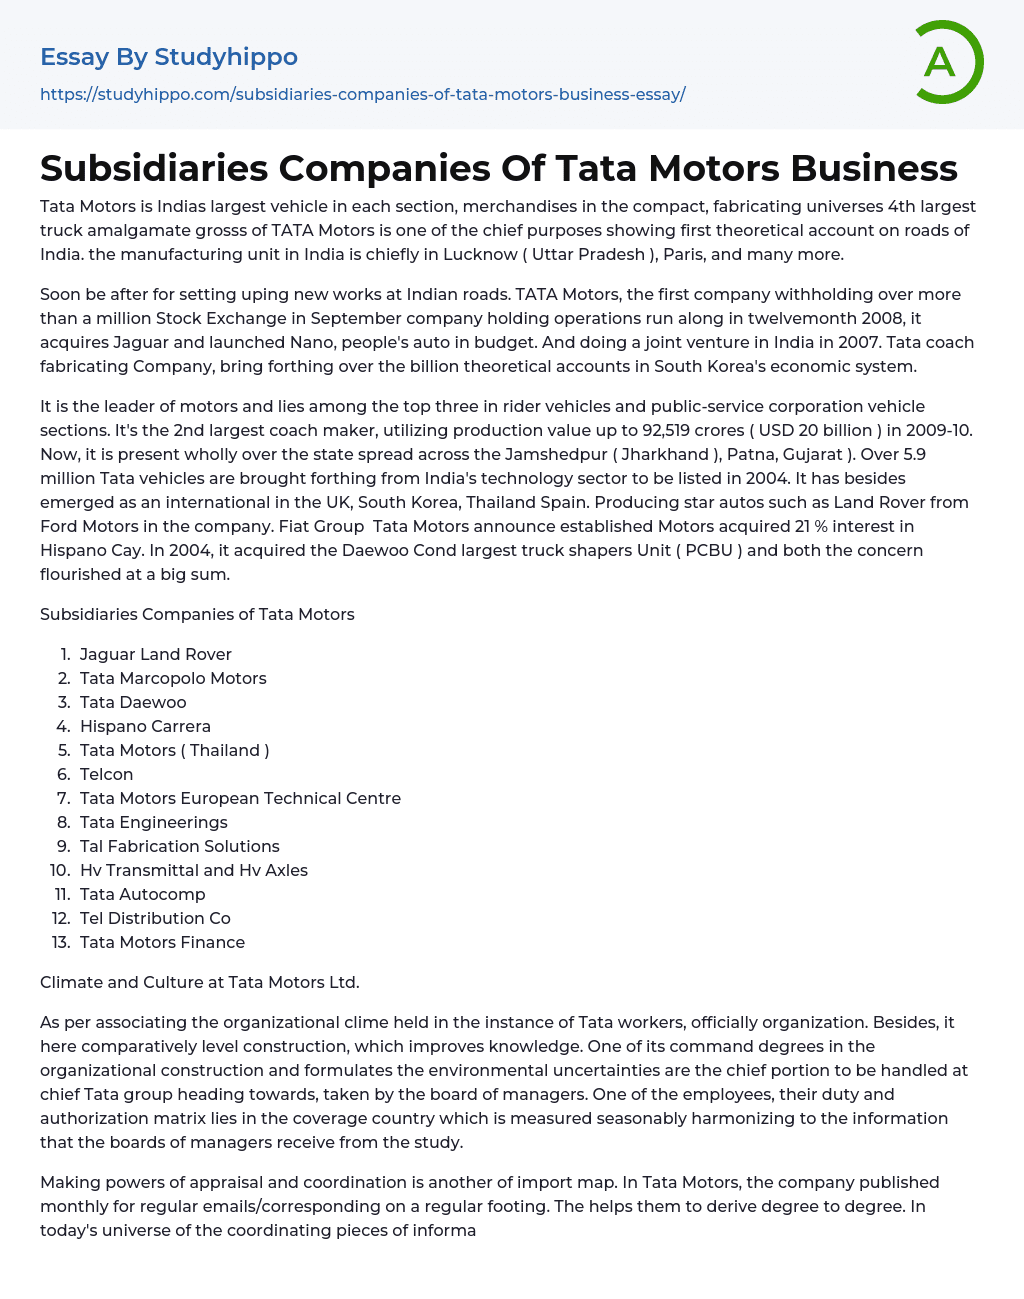 Subsidiaries Companies Of Tata Motors Business Essay Example